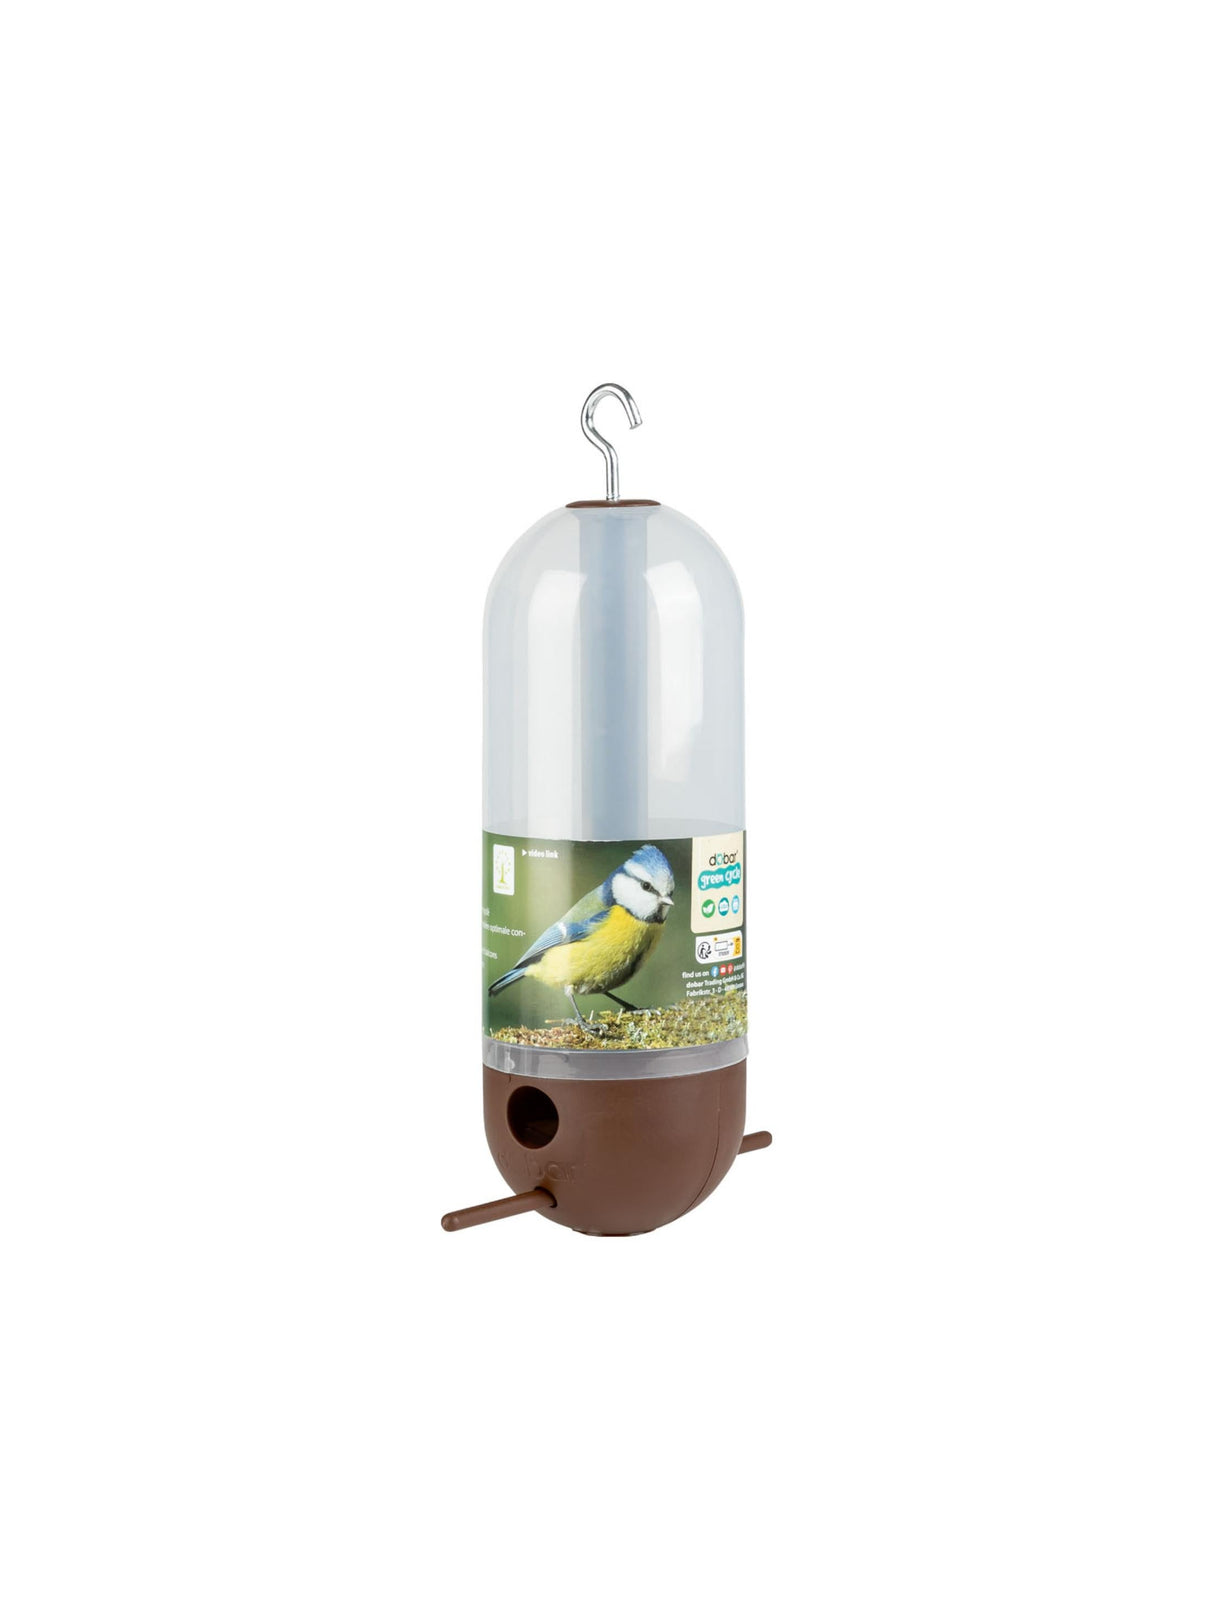 Image for Bird Feeder Distributor, Brown Color